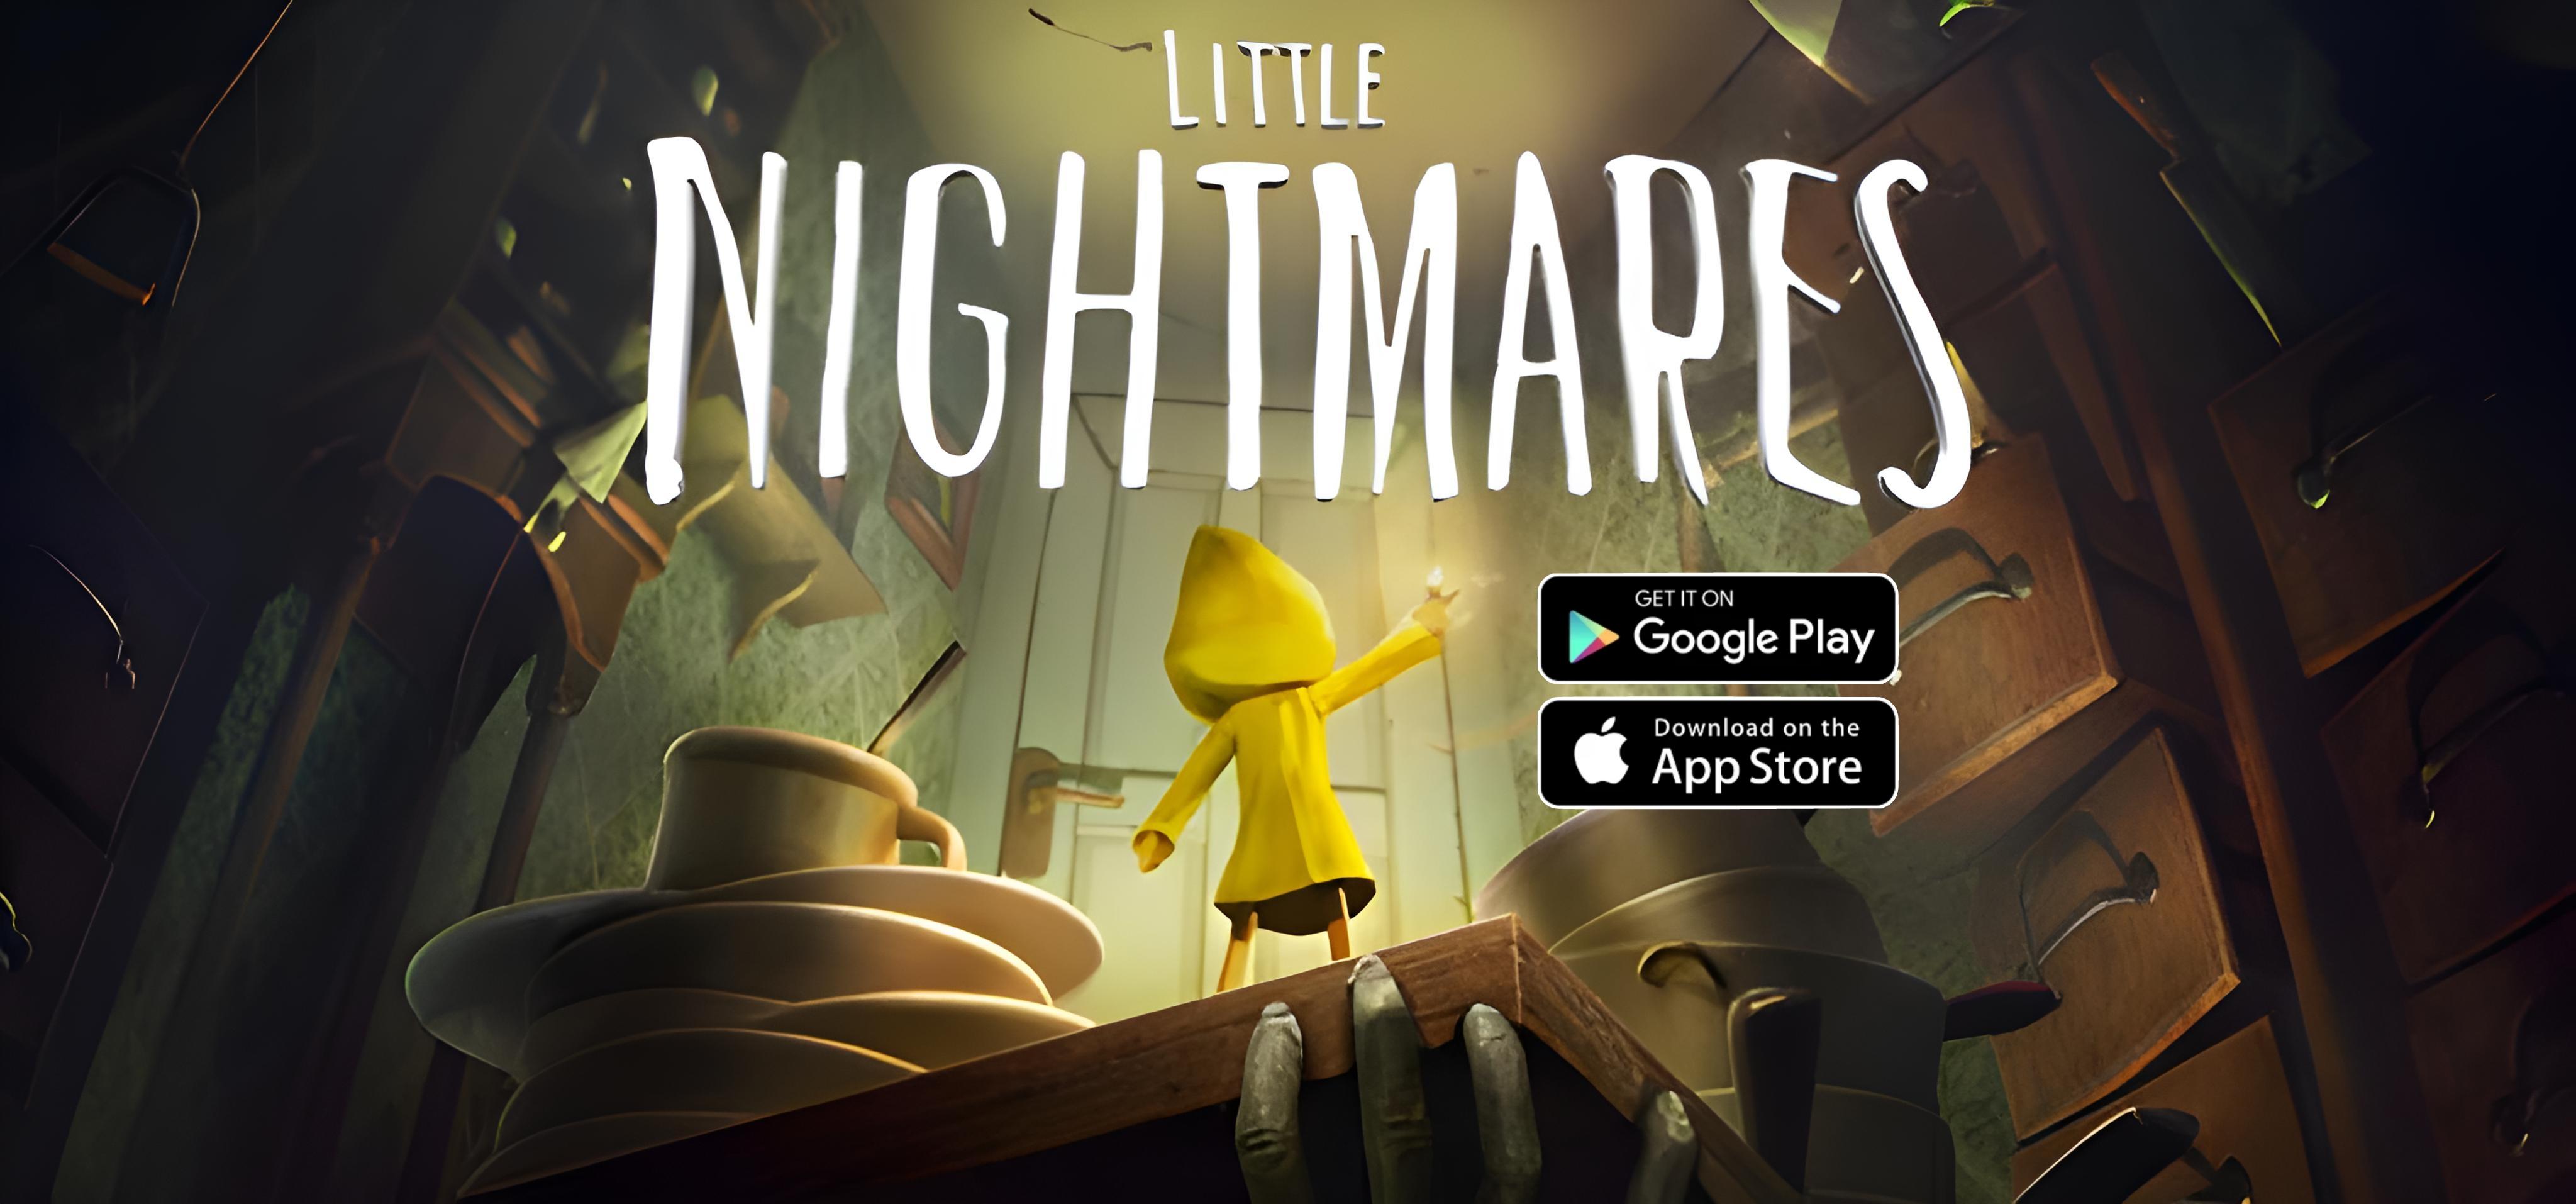 Little Nightmares APK Latest Version (104) Free Download 